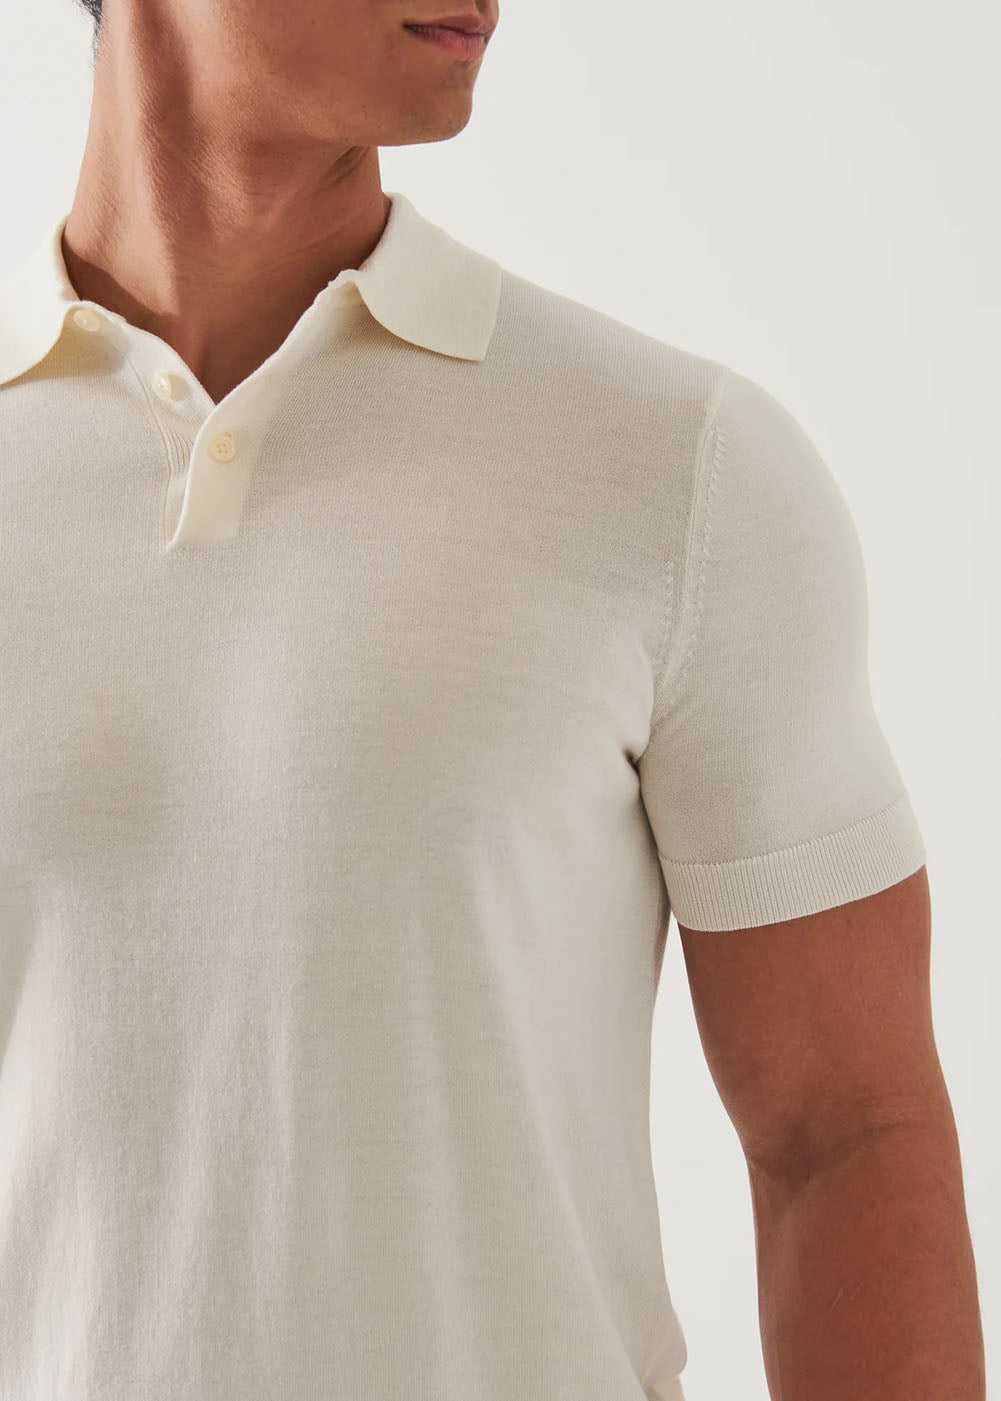 Cotton Cupro 3 Button Polo T-Shirt - White - Patrick Assaraf Canada - Danali - P154P15R